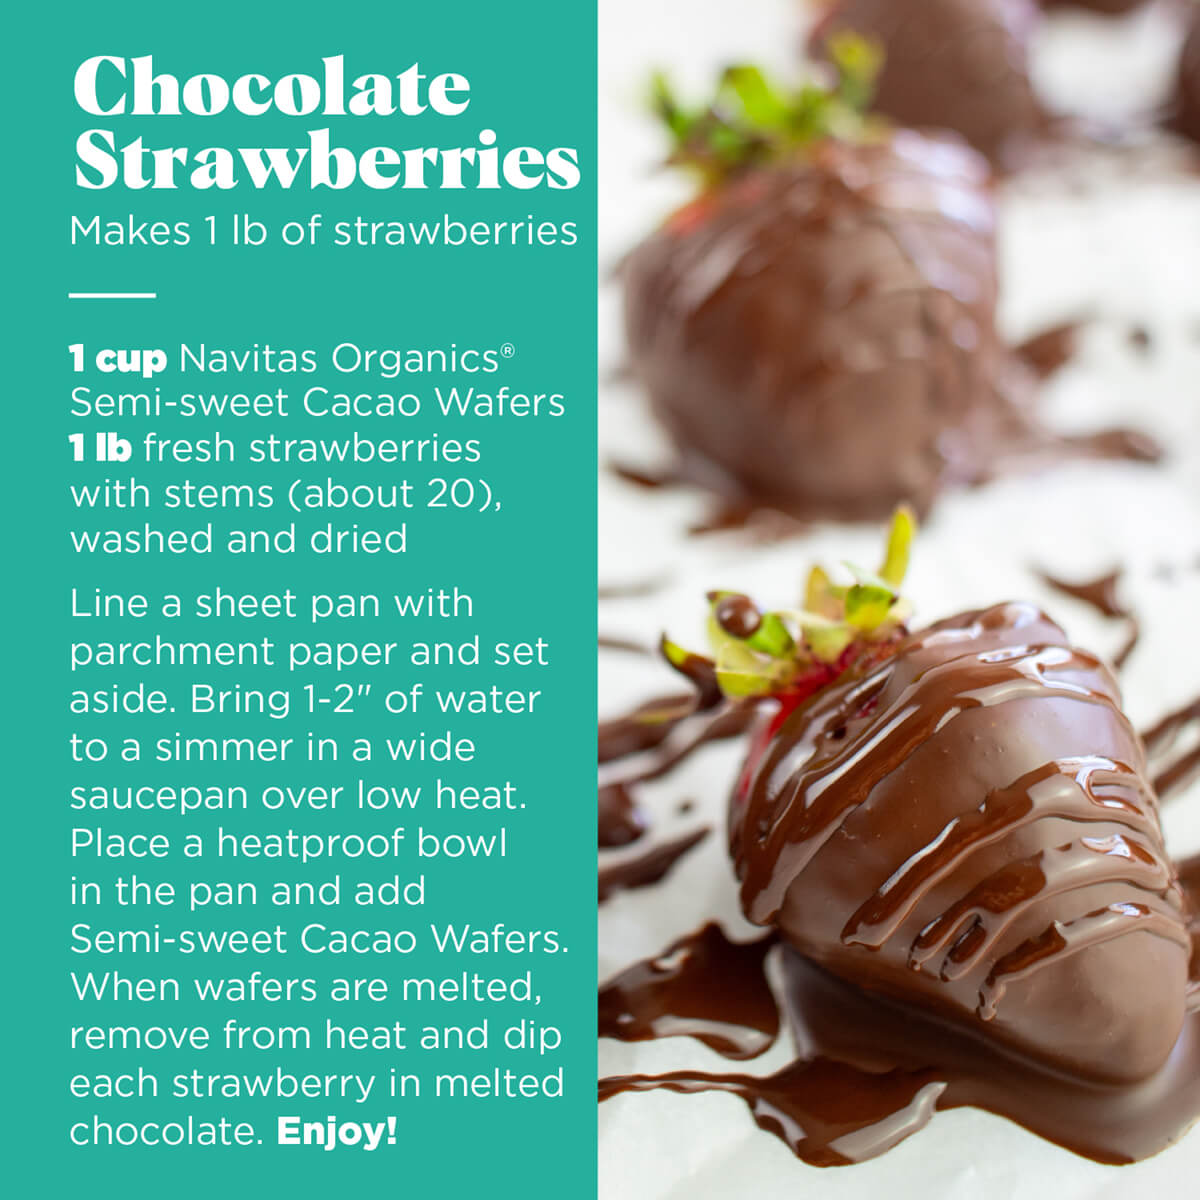 Chocolate strawberries recipe using Navitas Organics Semi-sweet Cacao Wafers.